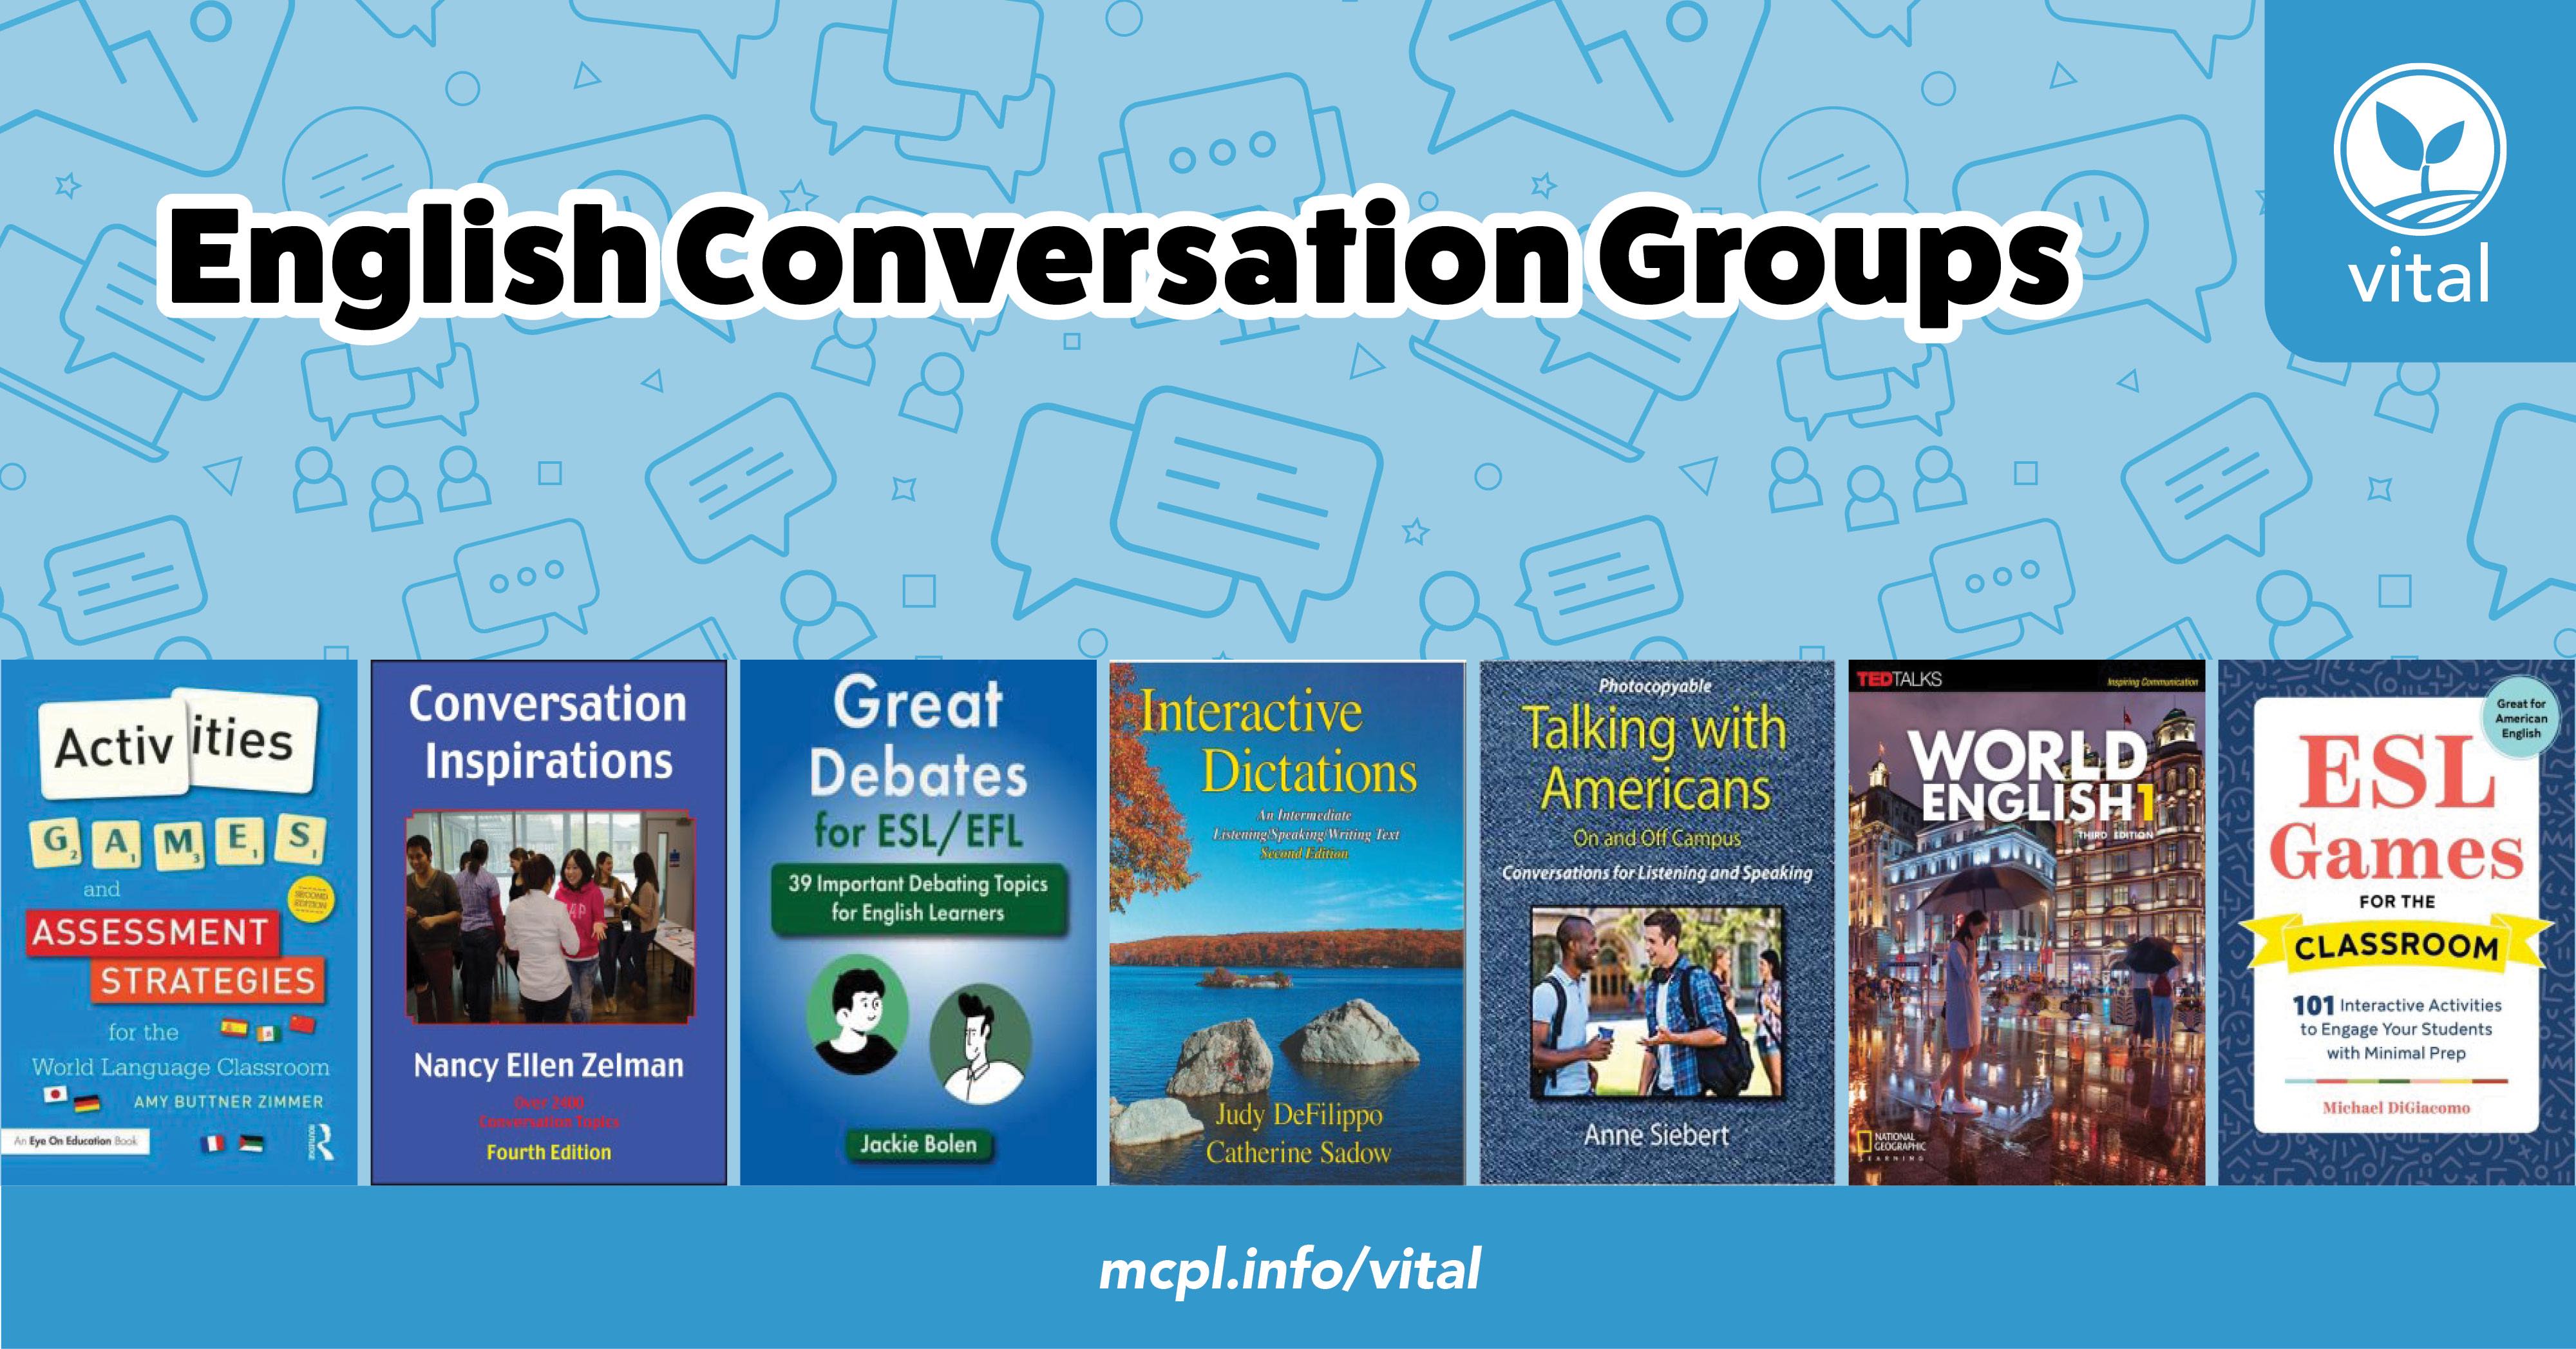 English Conversation Groups